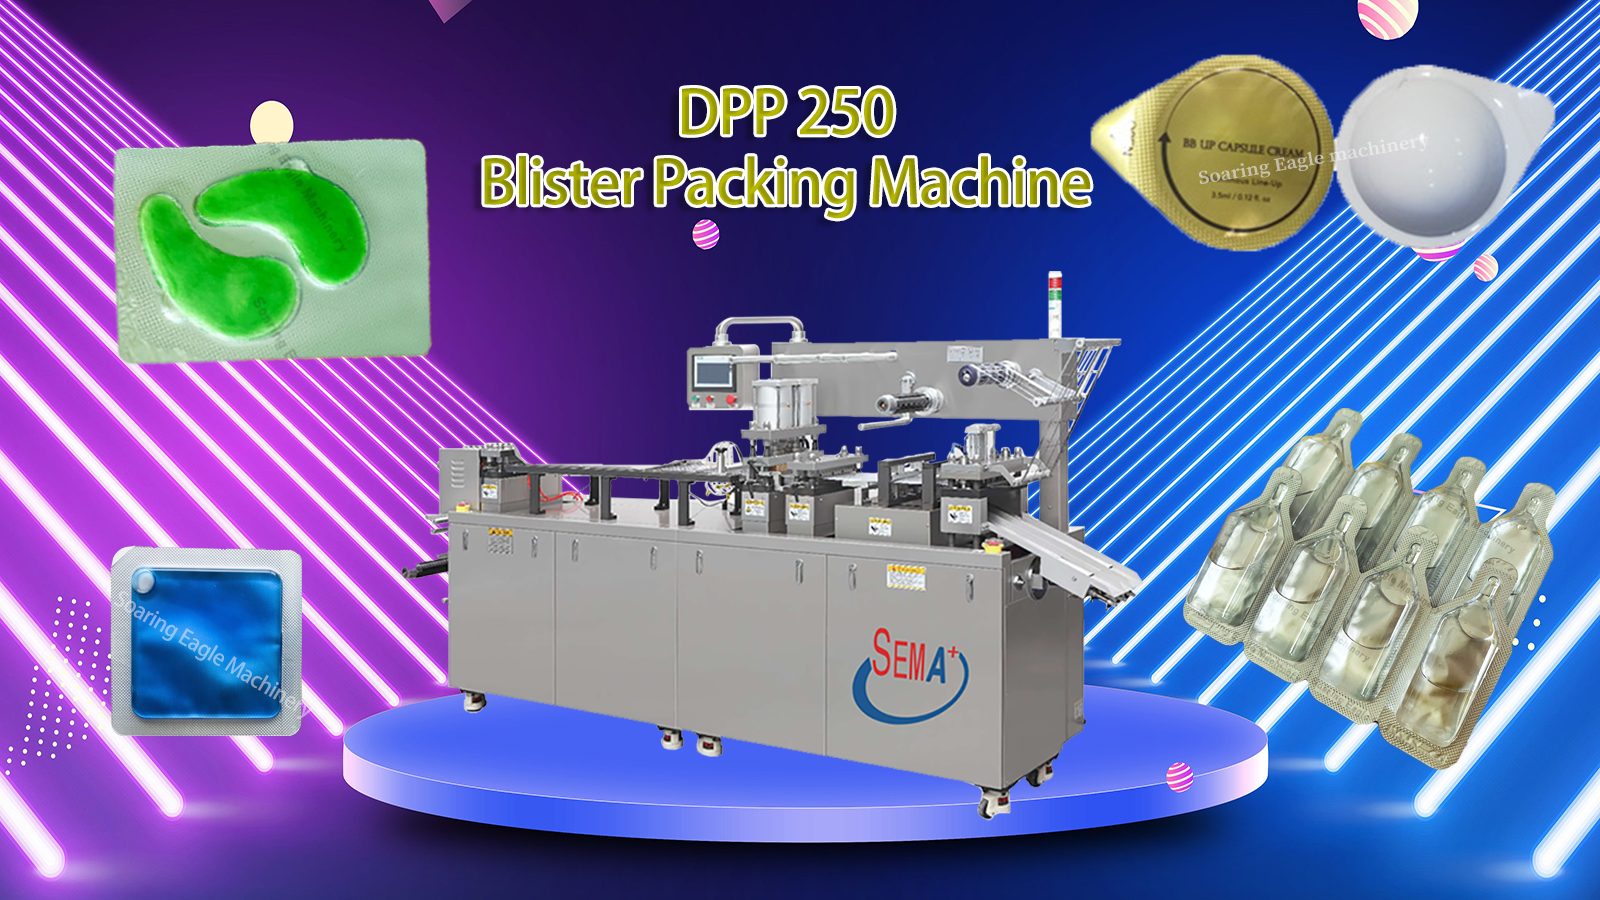 DPP250 blister packing machine